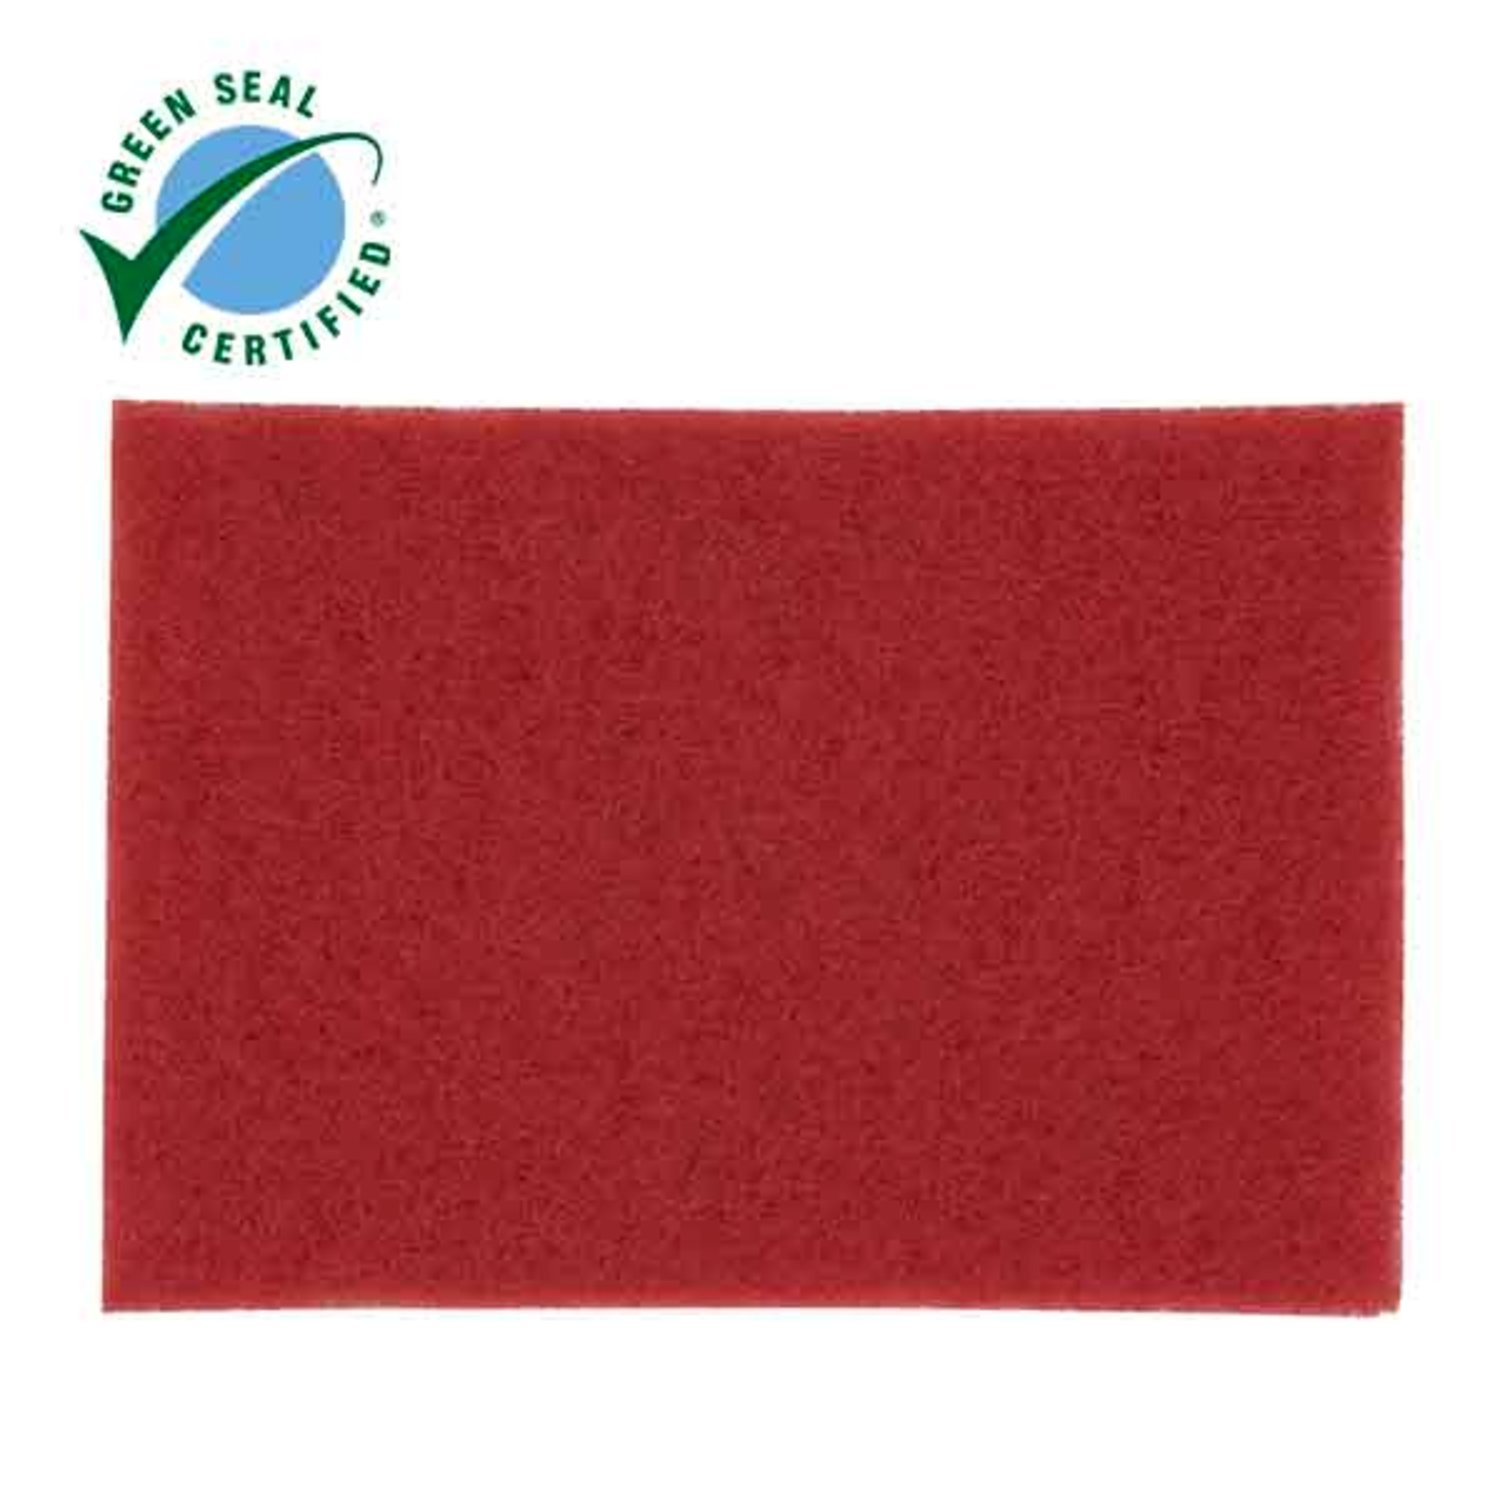 7000045974 - 3M Red Buffer Pad 5100, 12 in x 18 in, 20/Case